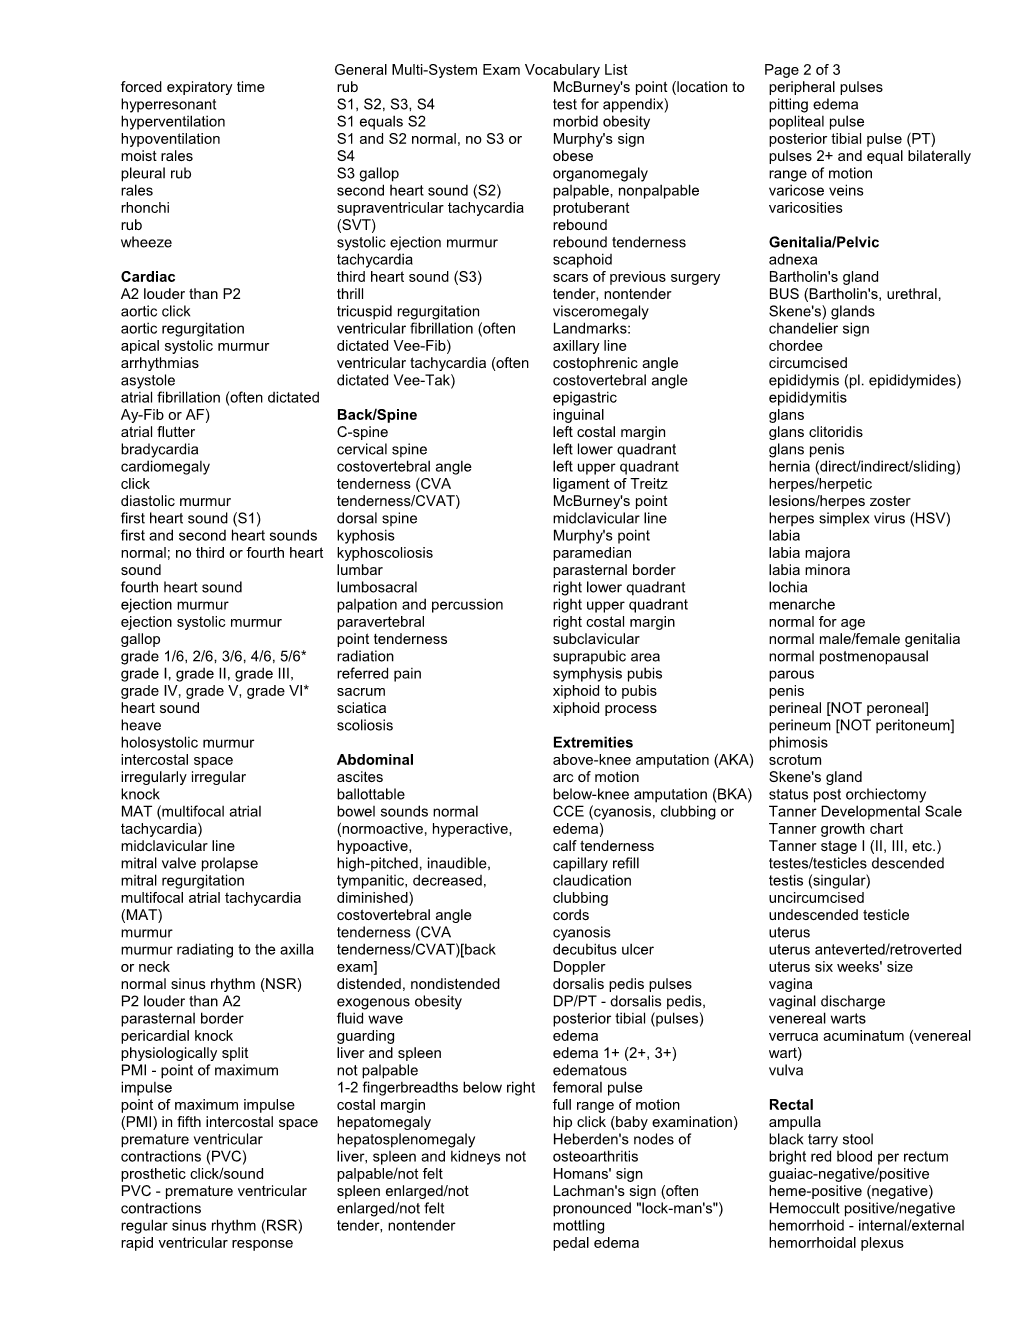 General Multi-System Exam Vocabulary Listpage 1 of 3